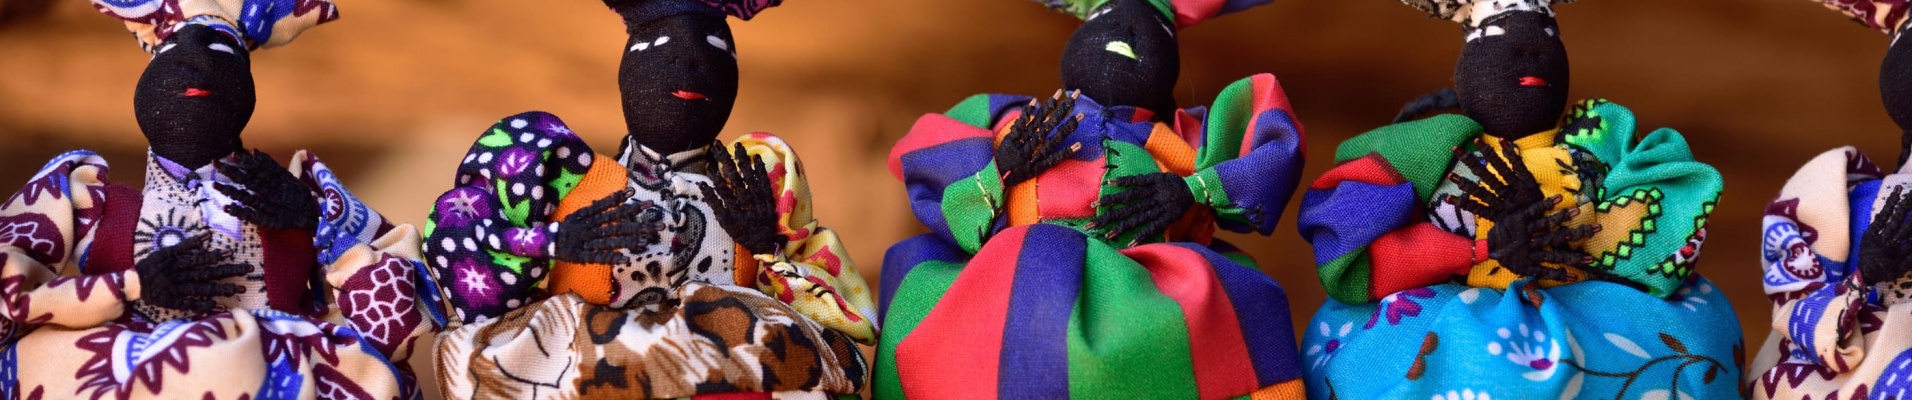 Herero dolls - popular handmade souvenir in Namibia